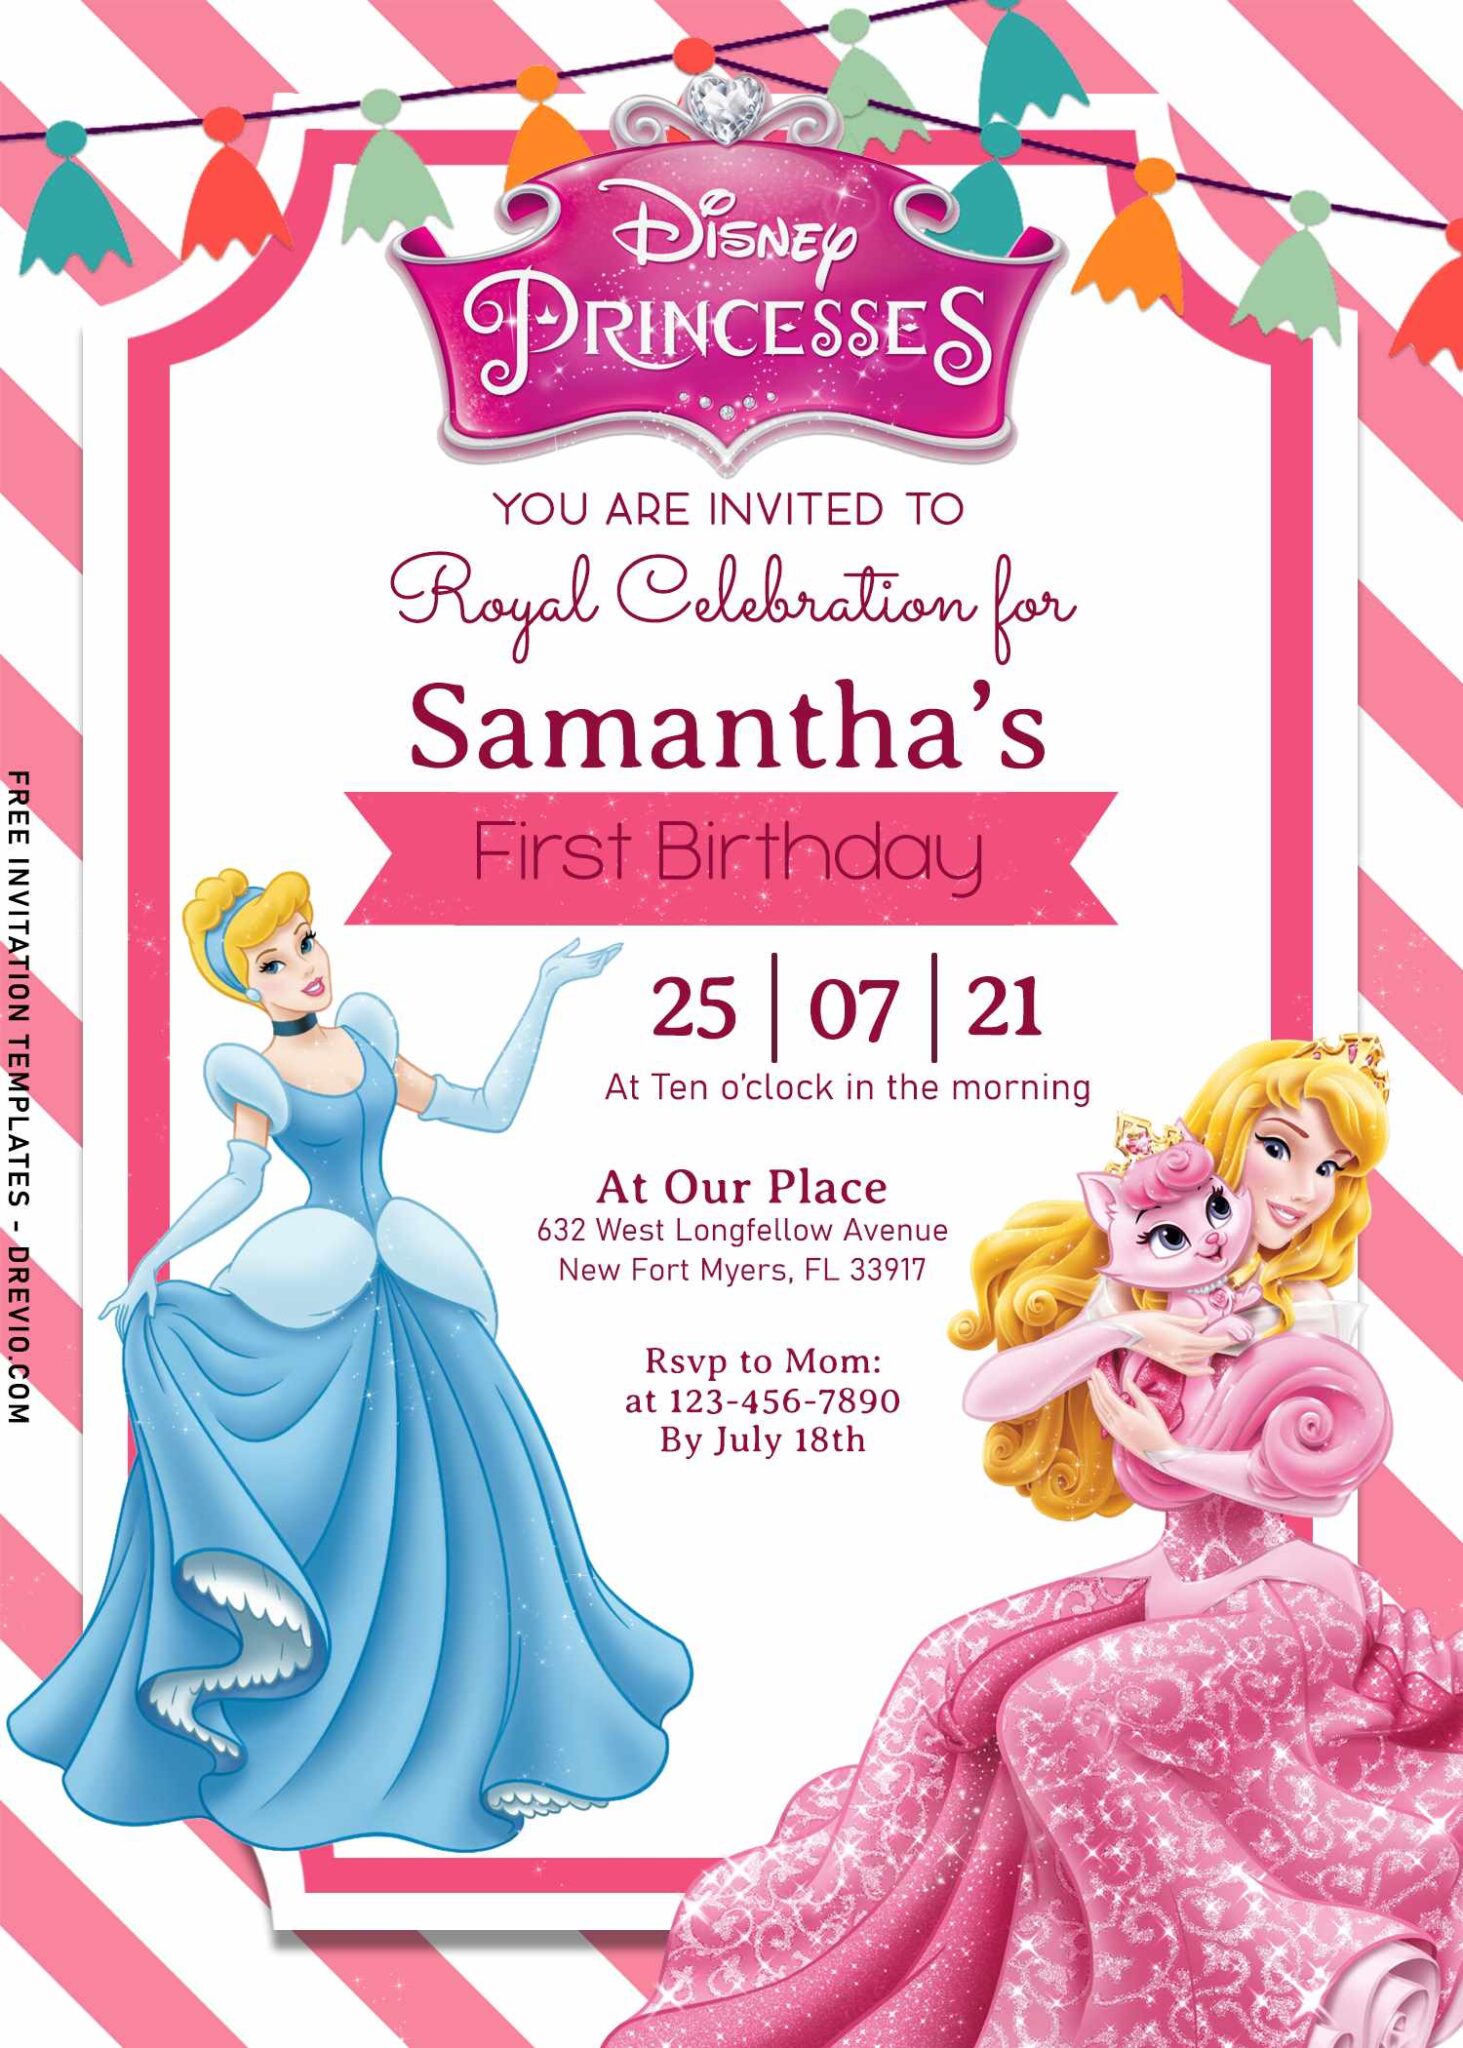 9+ Disney Princess And Castle Birthday Invitation Templates | Download ...